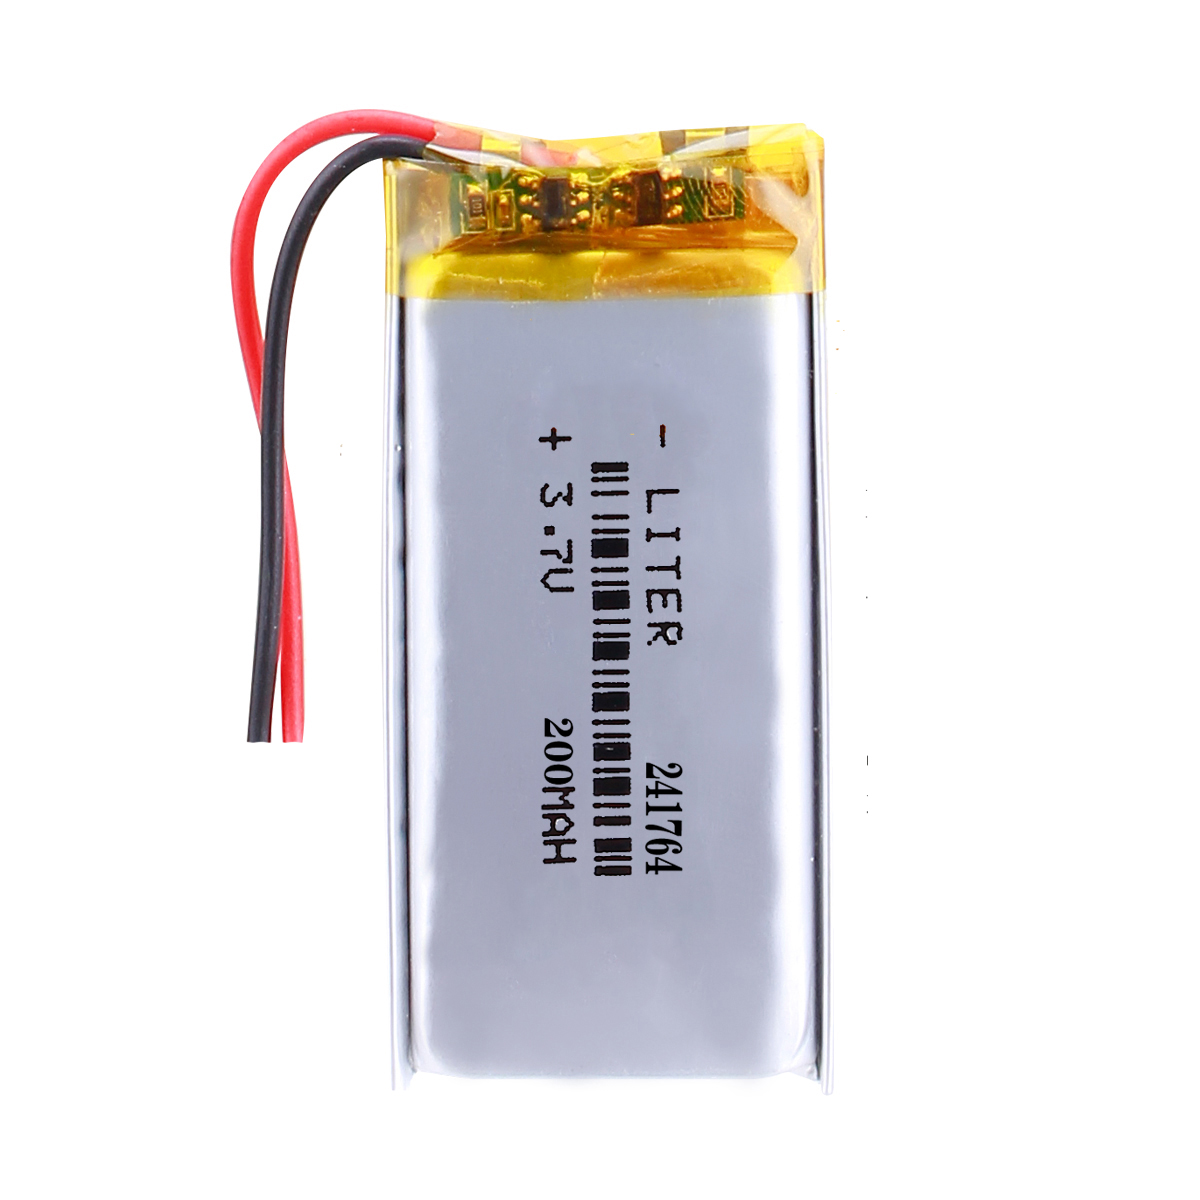 3.7V Quadrate LP362227 Lithium Polymer Battery 240mAH